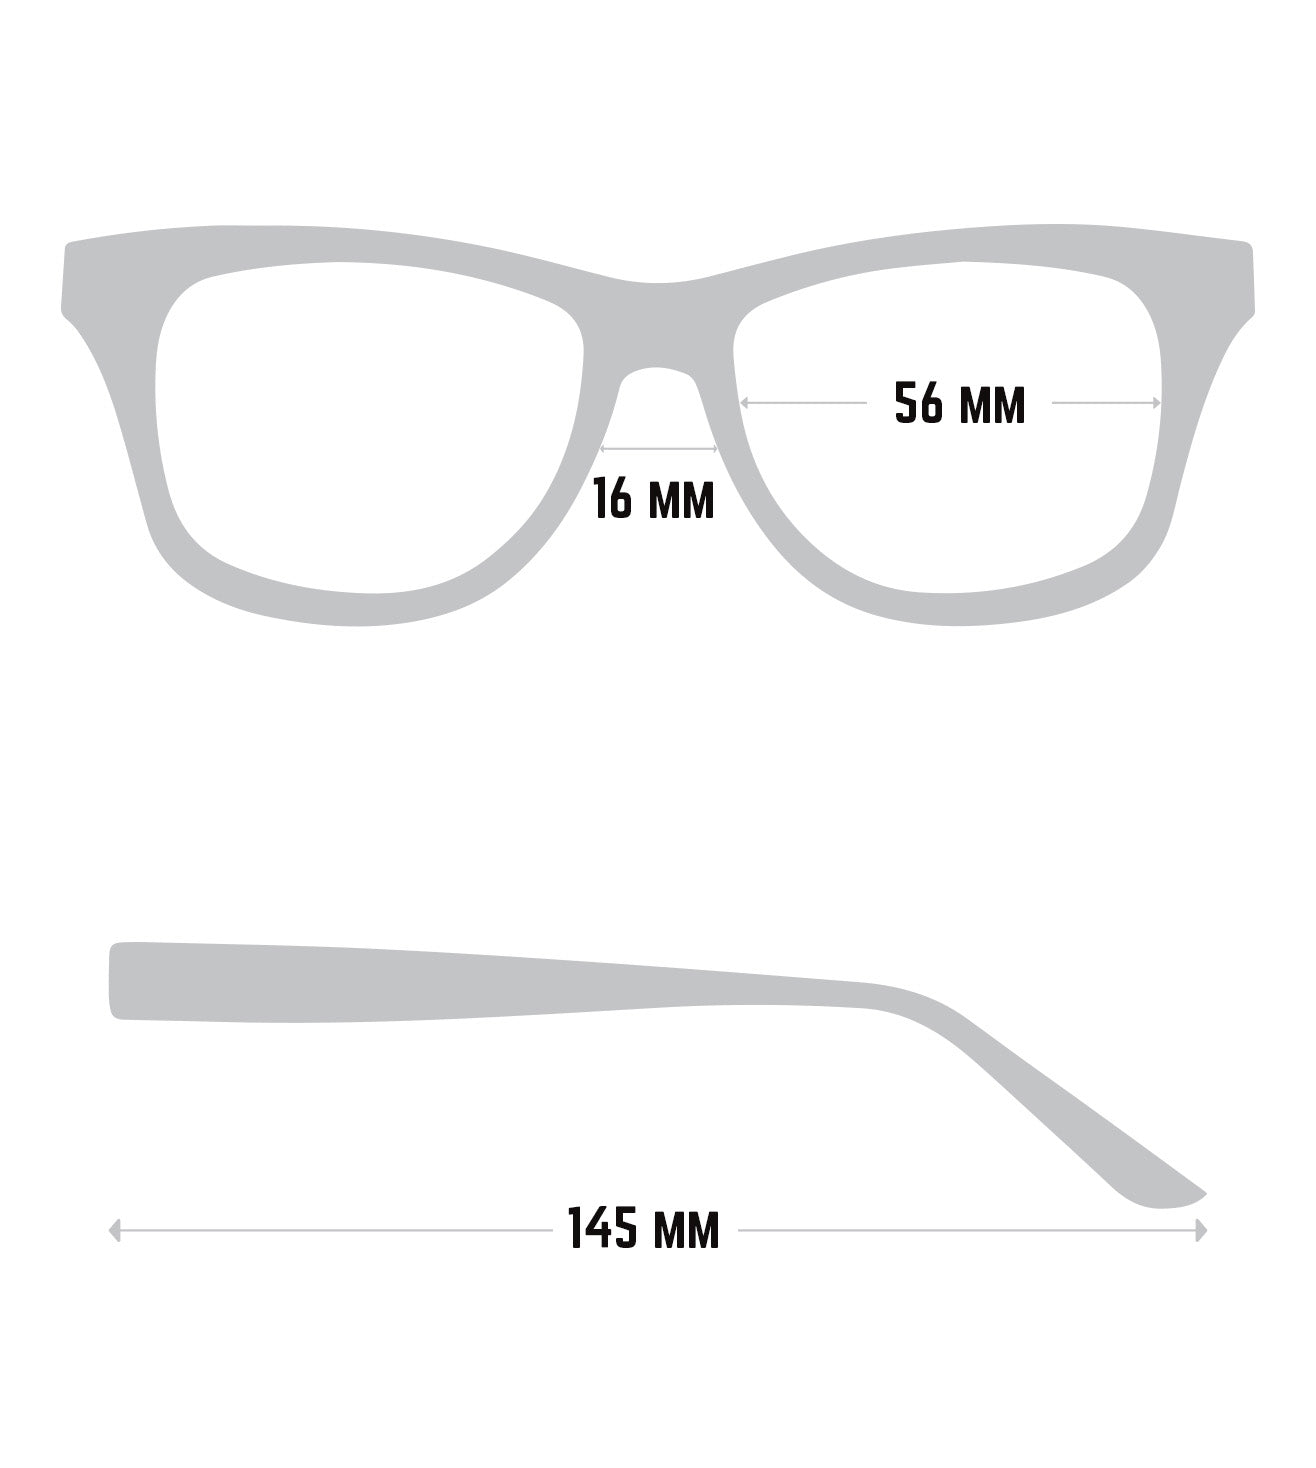 Montblanc Men's Silver Rectangular Optical Frame